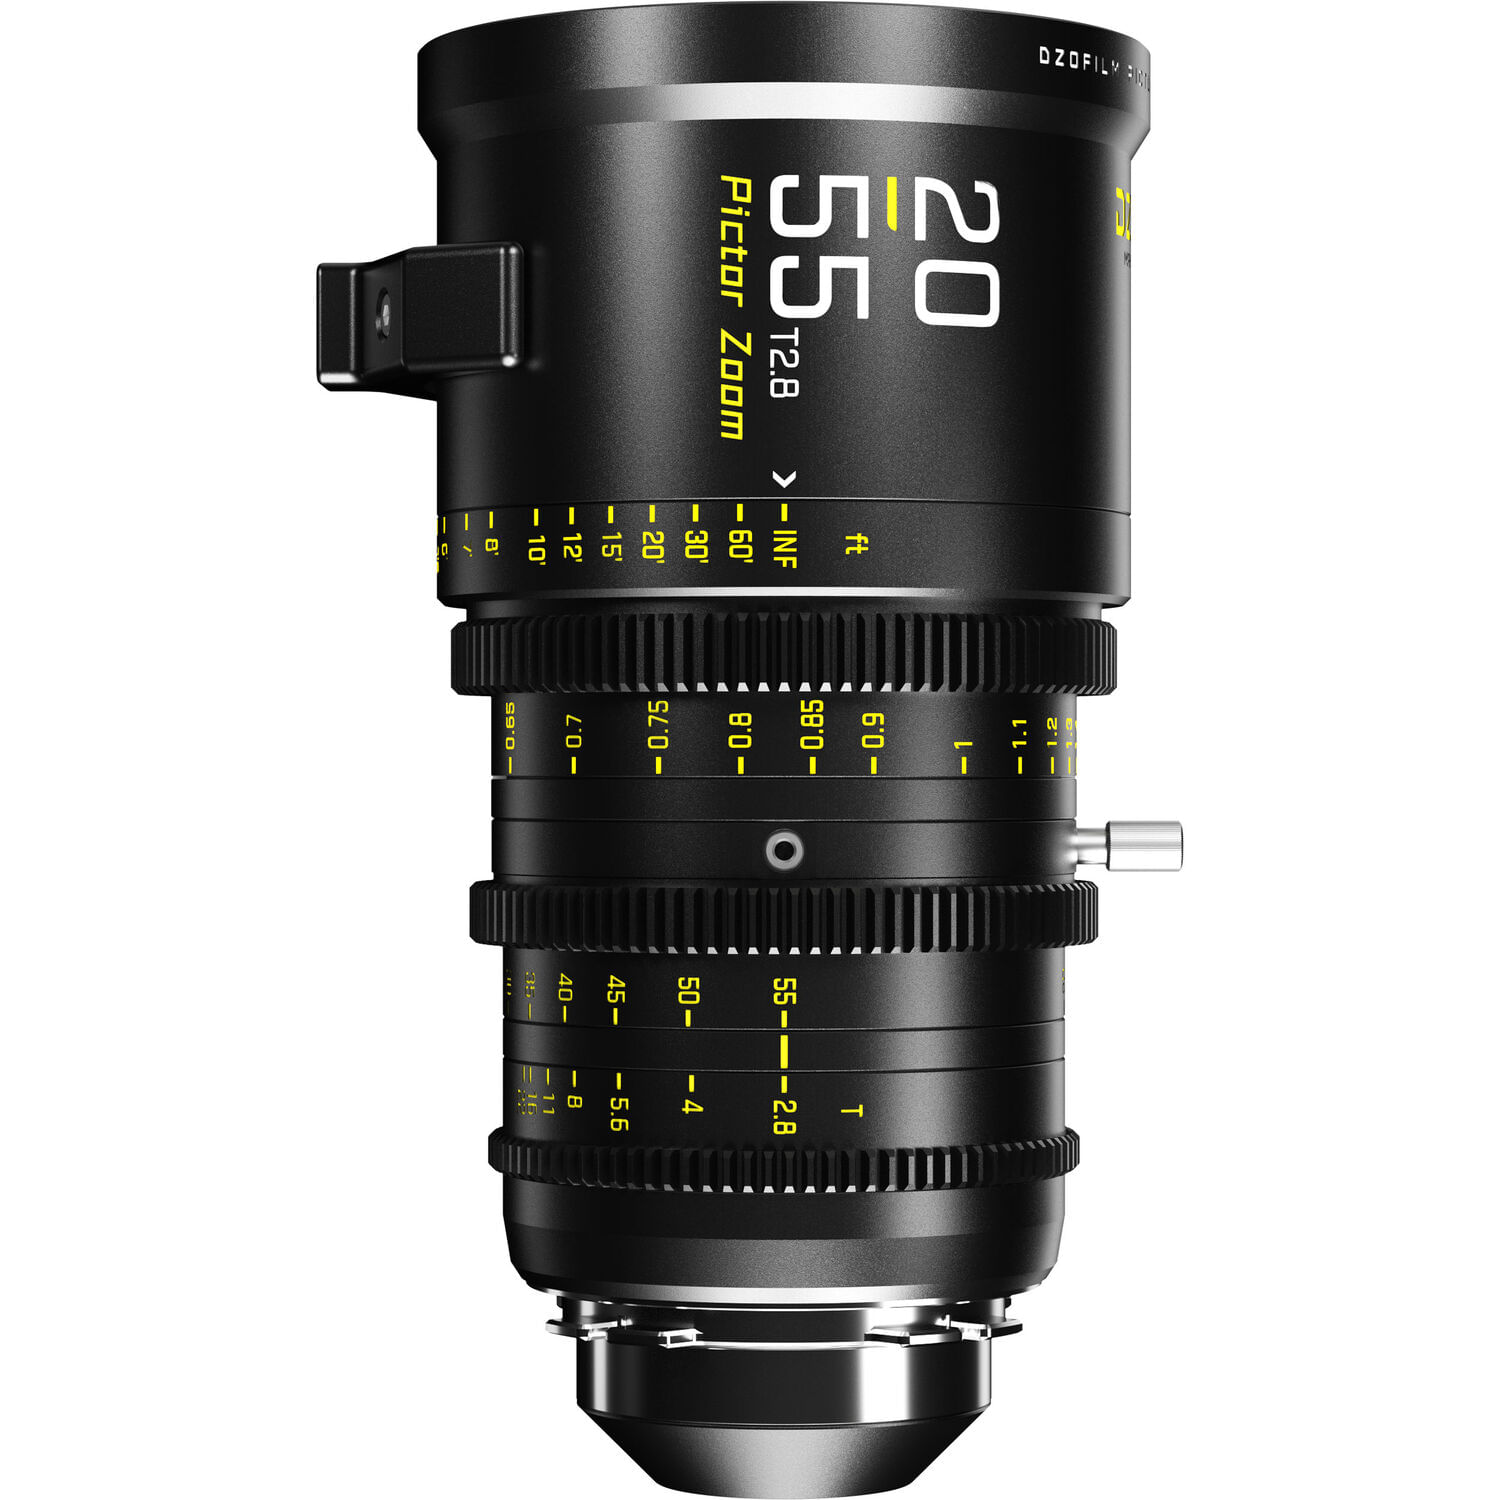 Lente zoom parfocal DZOFilm Pictor de 20 a 55 mm T2.8 Super35 (montura PL y montura EF)